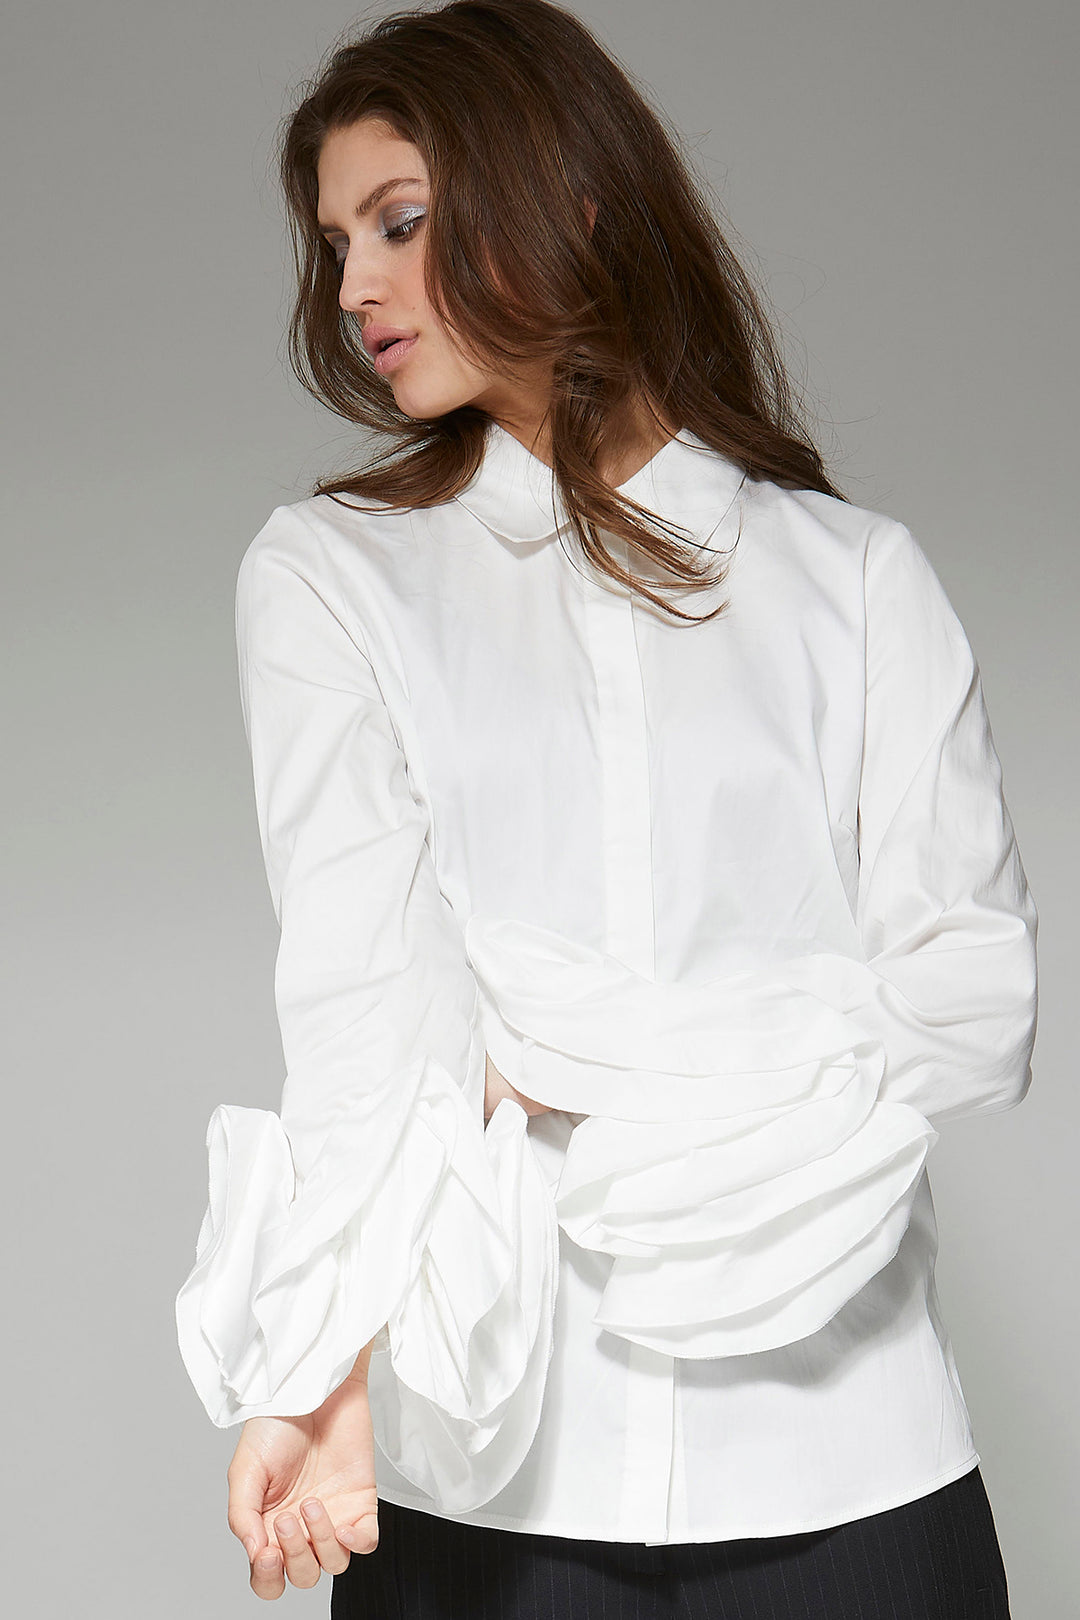 PBO Minra shirt SHIRTS 101 Star white